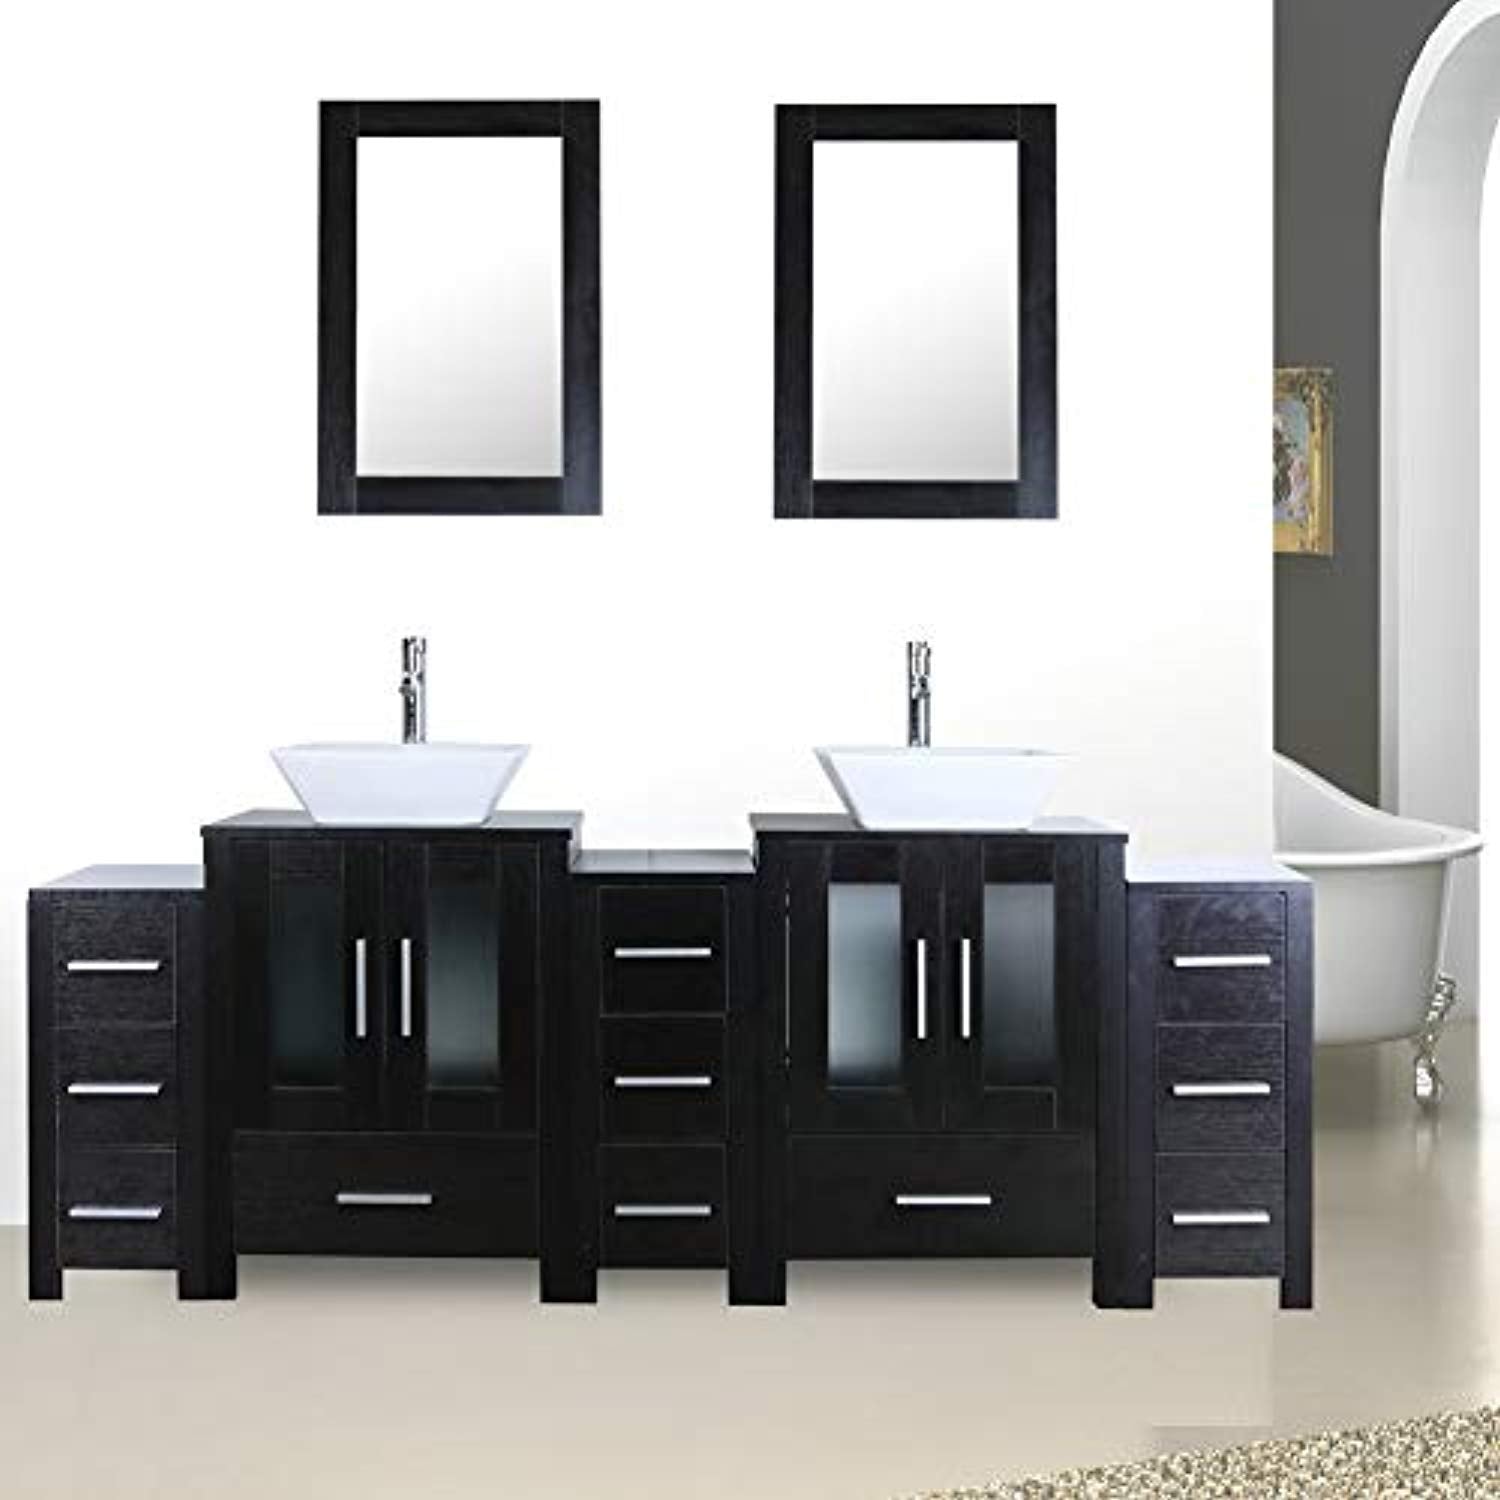 84 Double Sink Bathroom Vanity Unit And Sink Combo Black Wood Texture Ek Chic Home